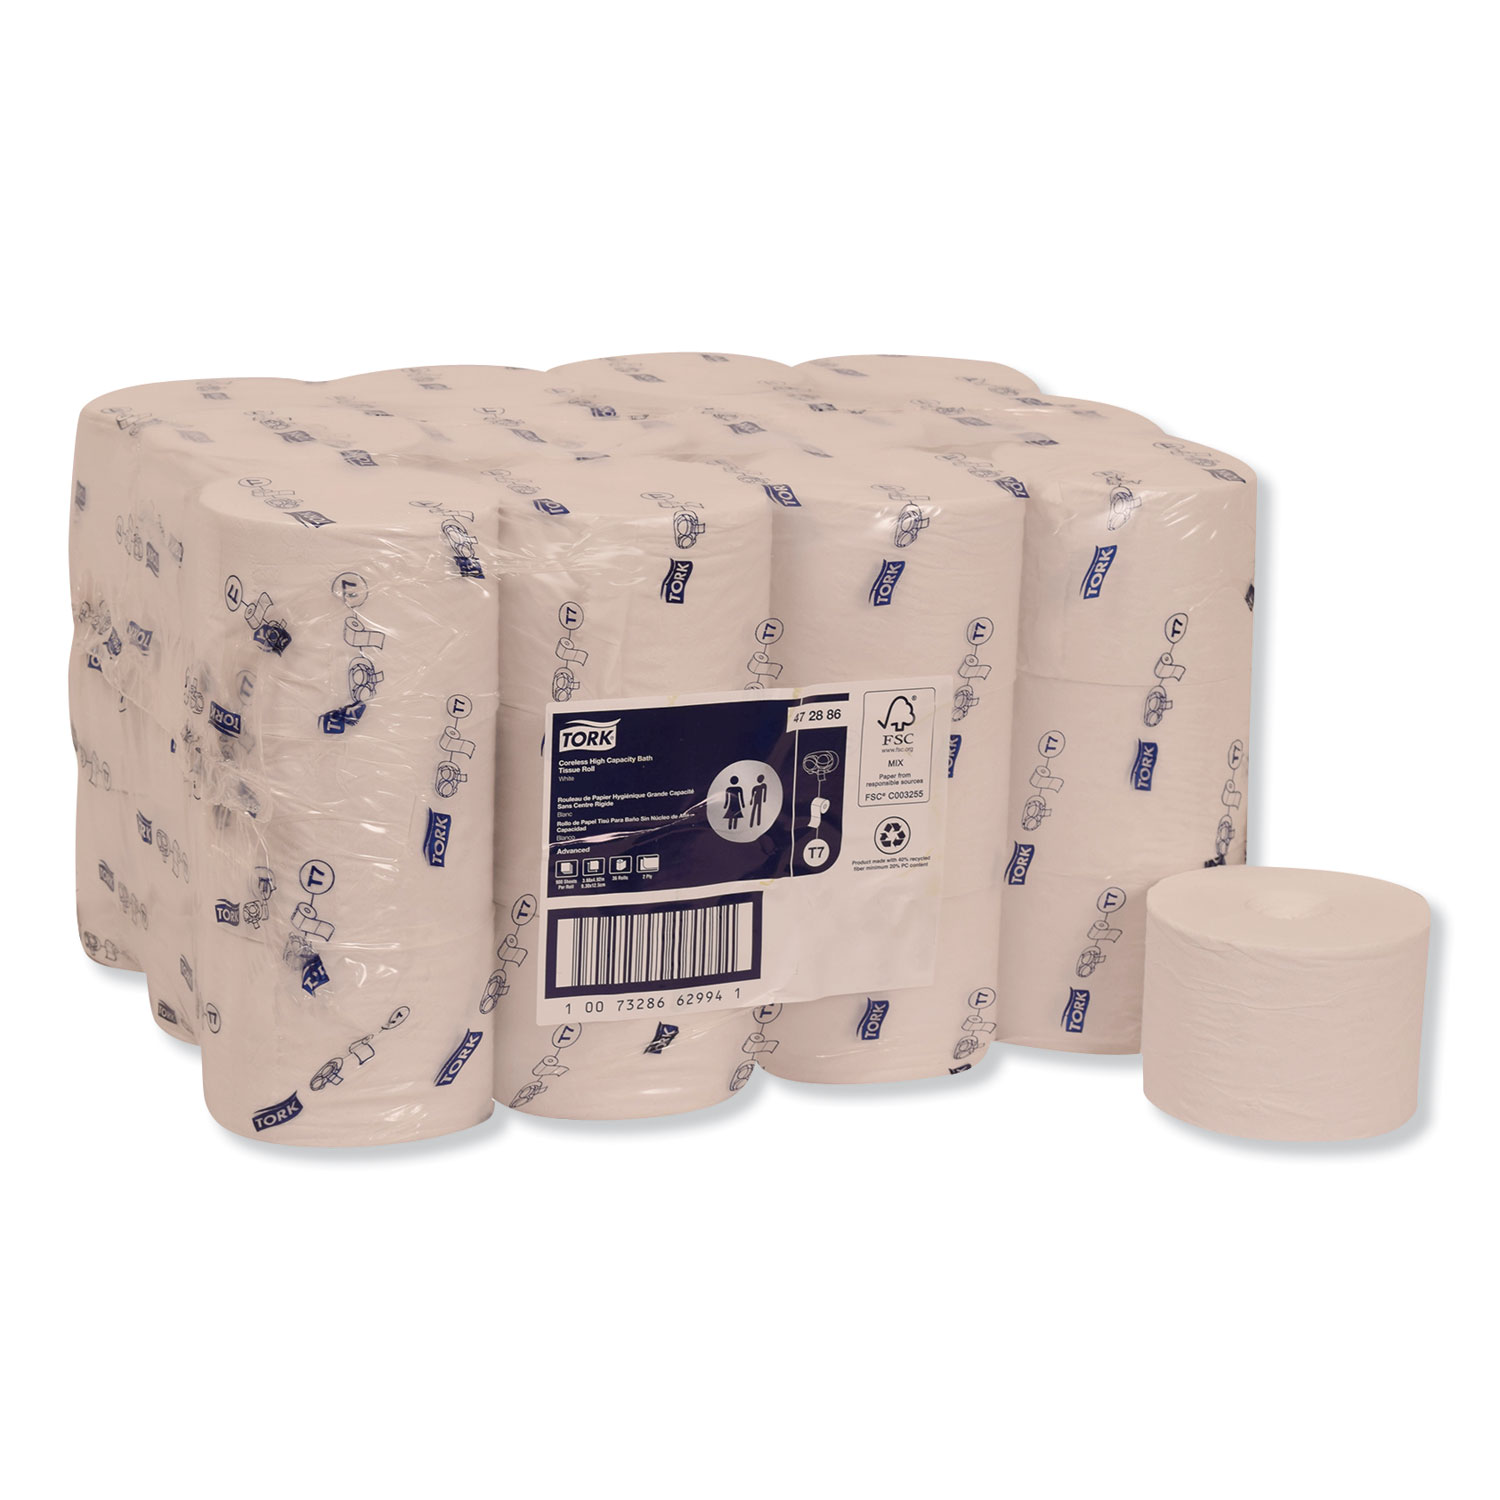  Tork 472886 Advanced High Capacity Bath Tissue, Septic Safe, 2-Ply, Coreless, White, 900 Sheets/Roll, 36 Rolls/Carton (TRK472886) 